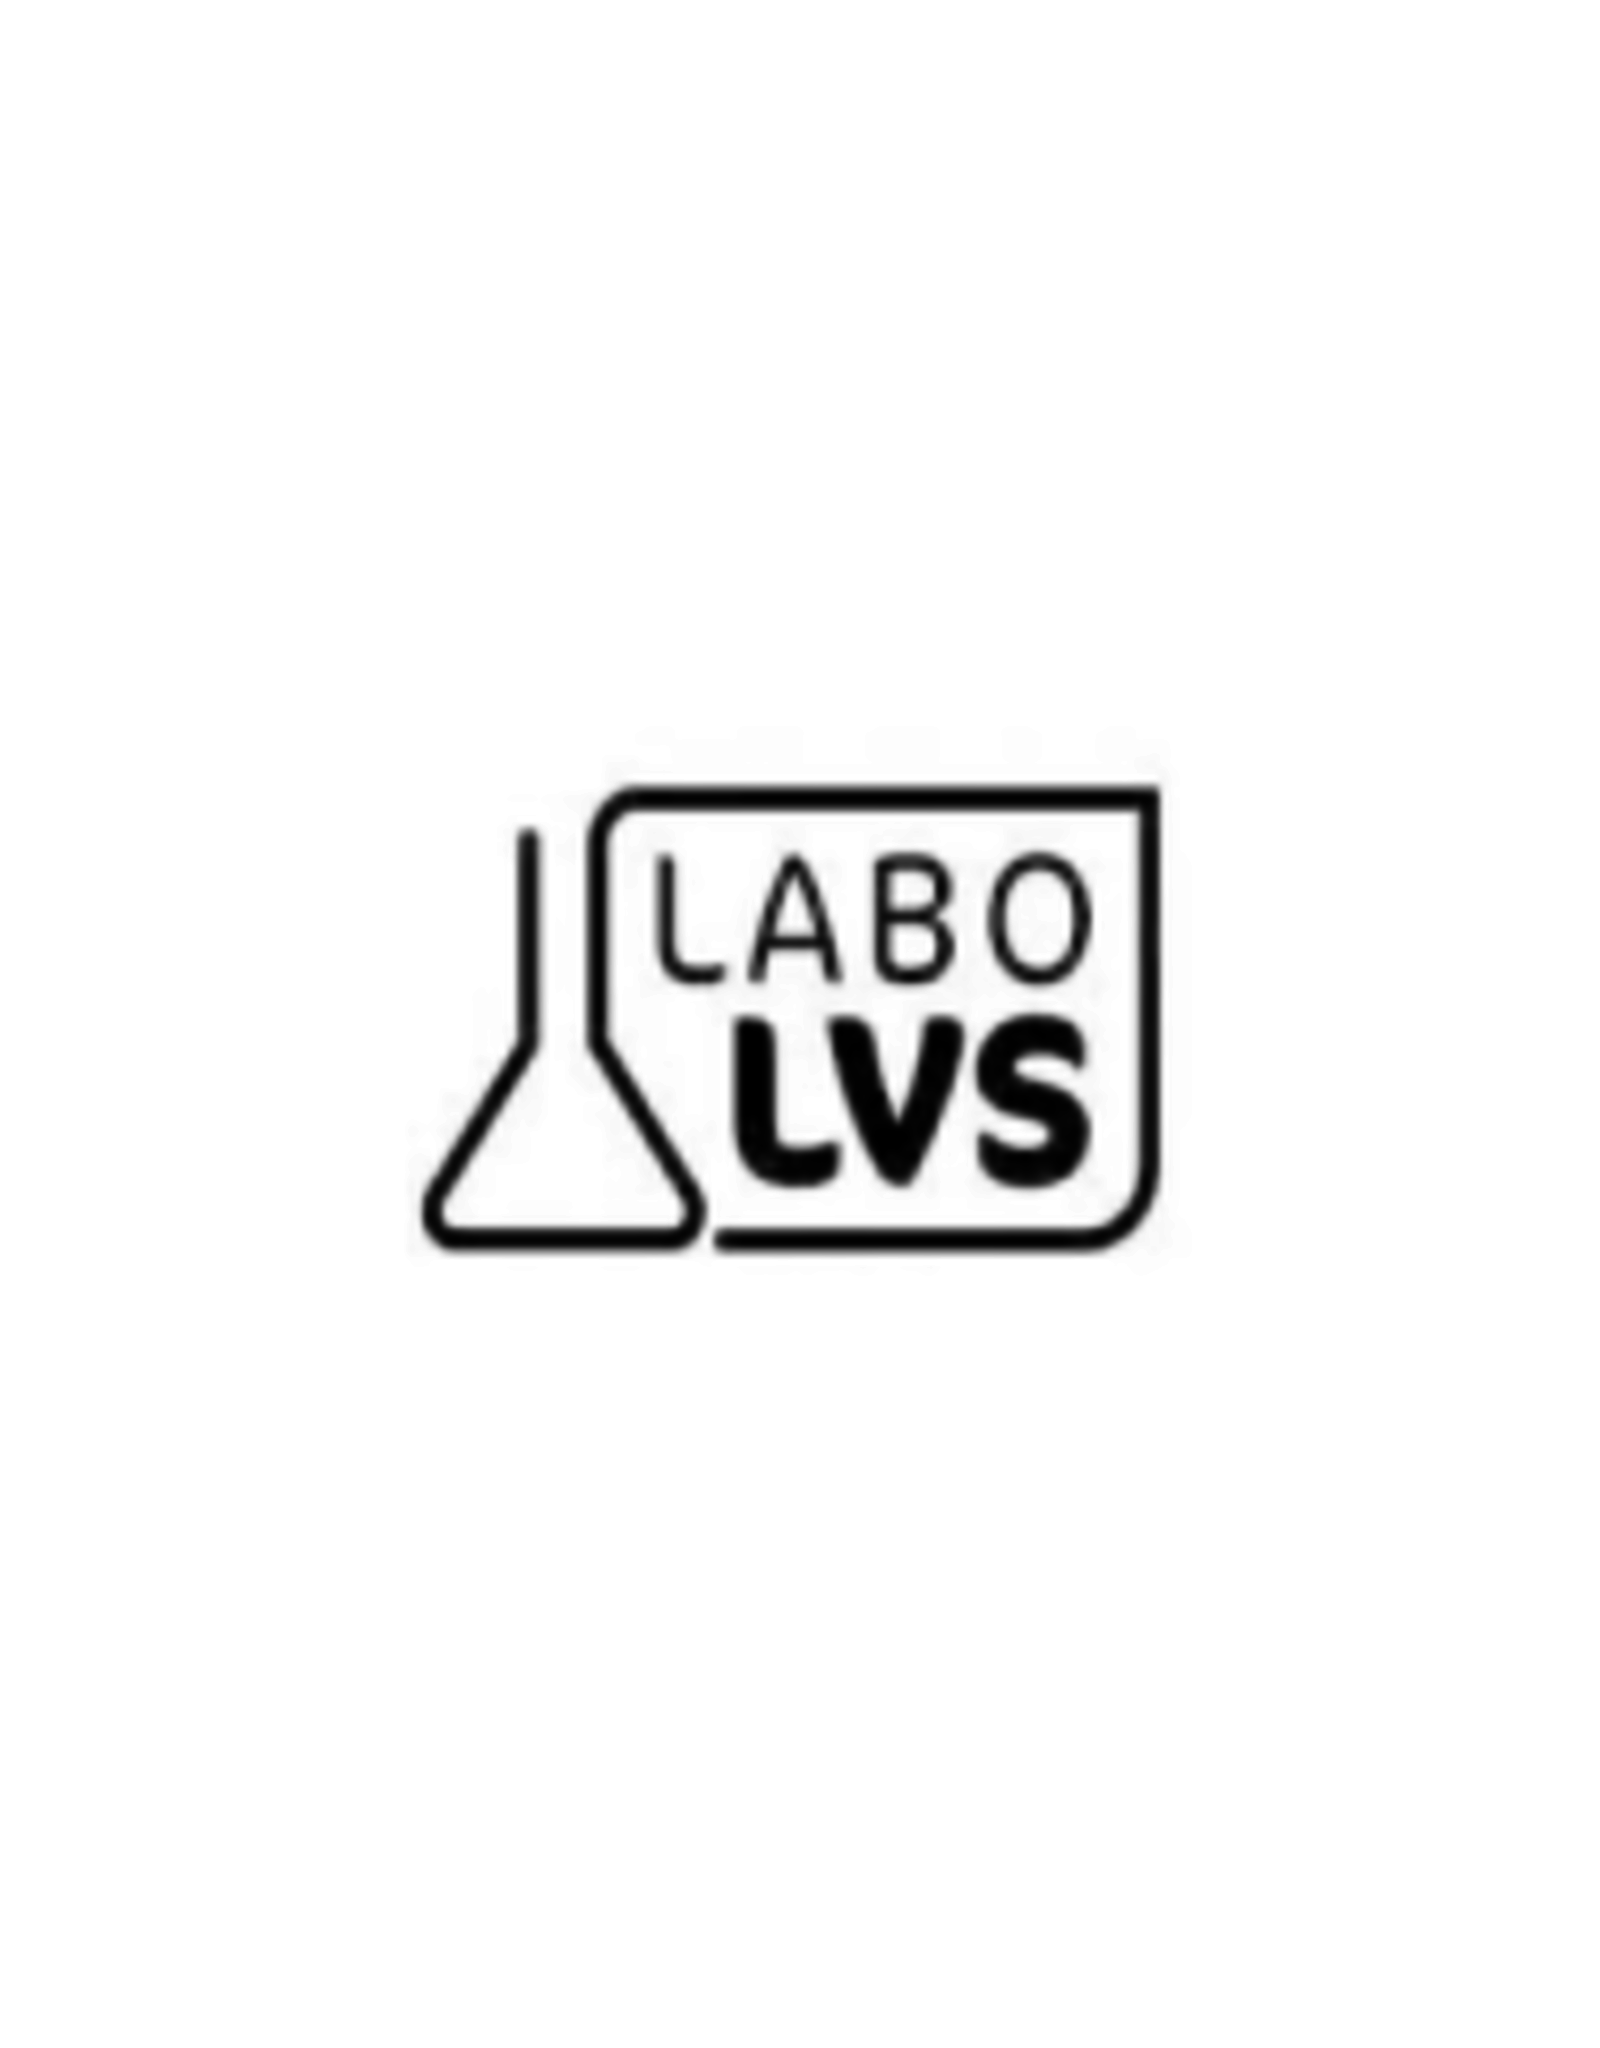 STLTH EXCISE STLTH Premium Pods (3x2ml) Labo LVS